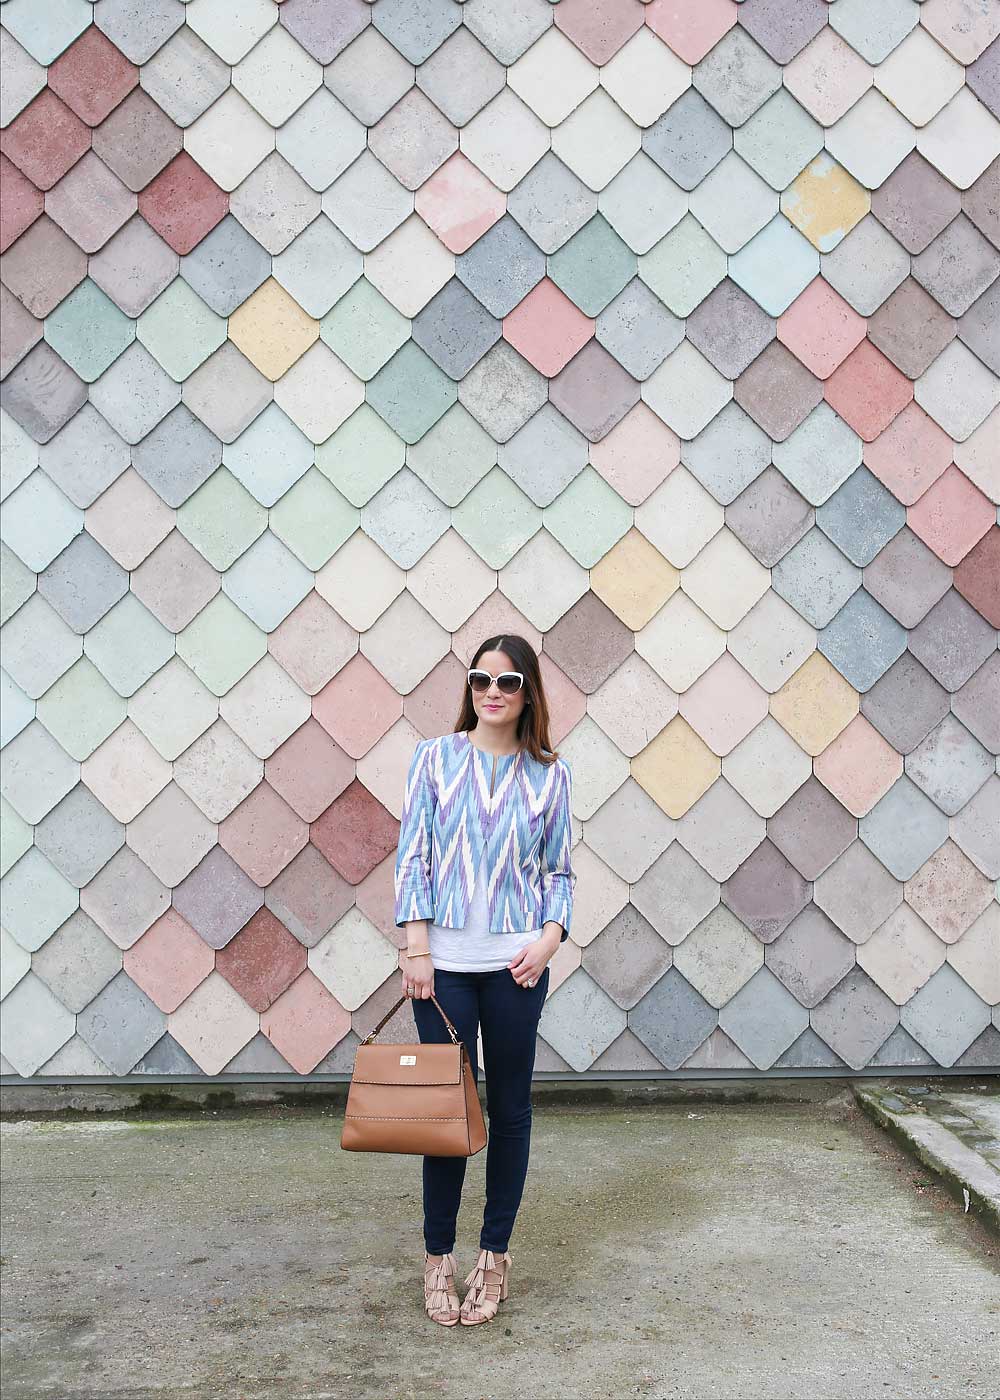 London Multicolor Tile Wall